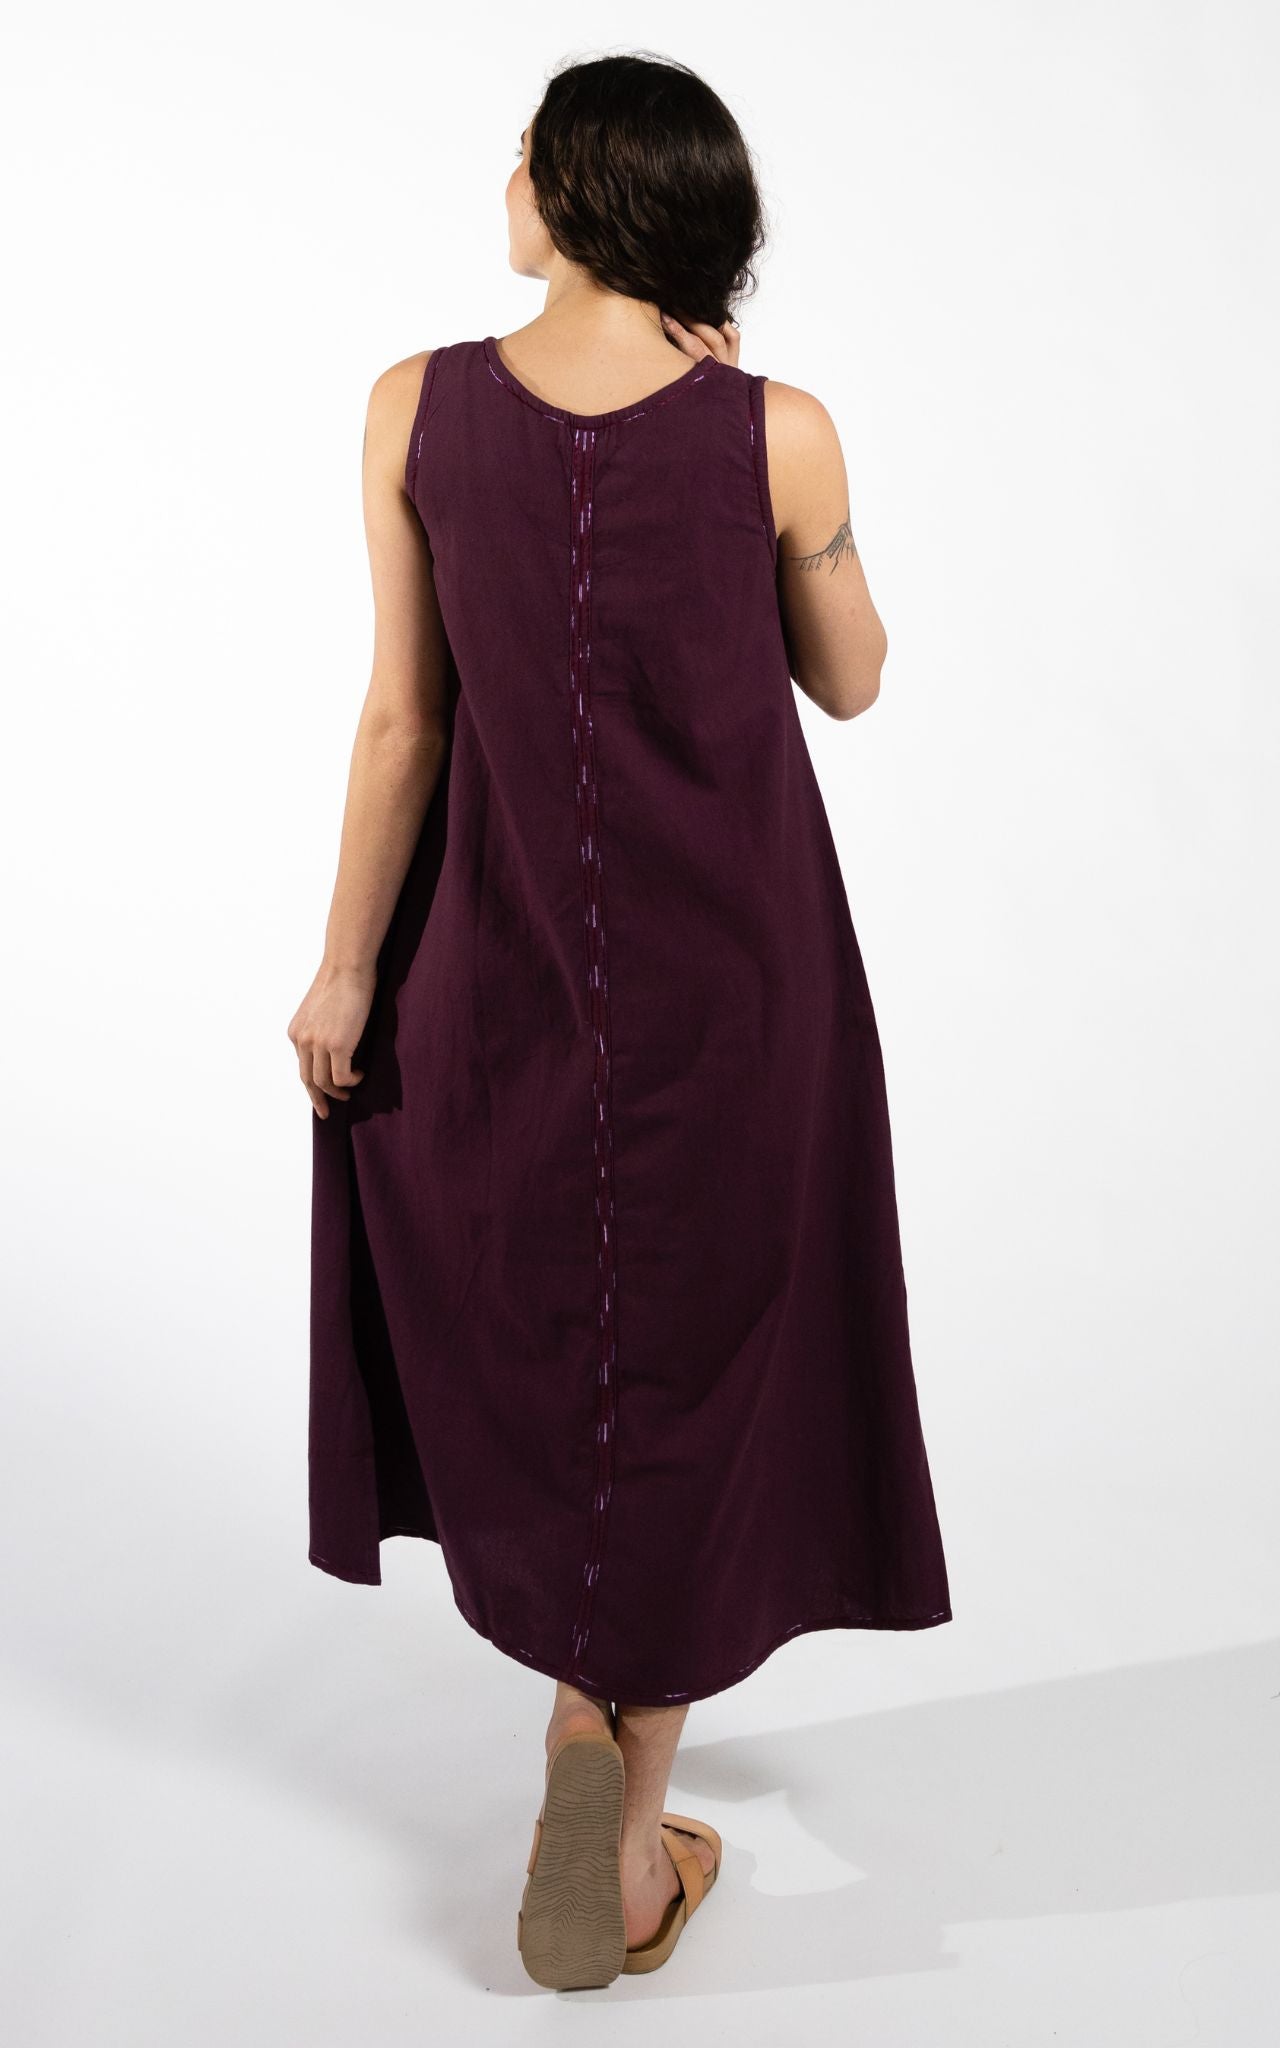 Surya Australia Ethical Cotton 'Calliope' Dress made in Nepal - Wine